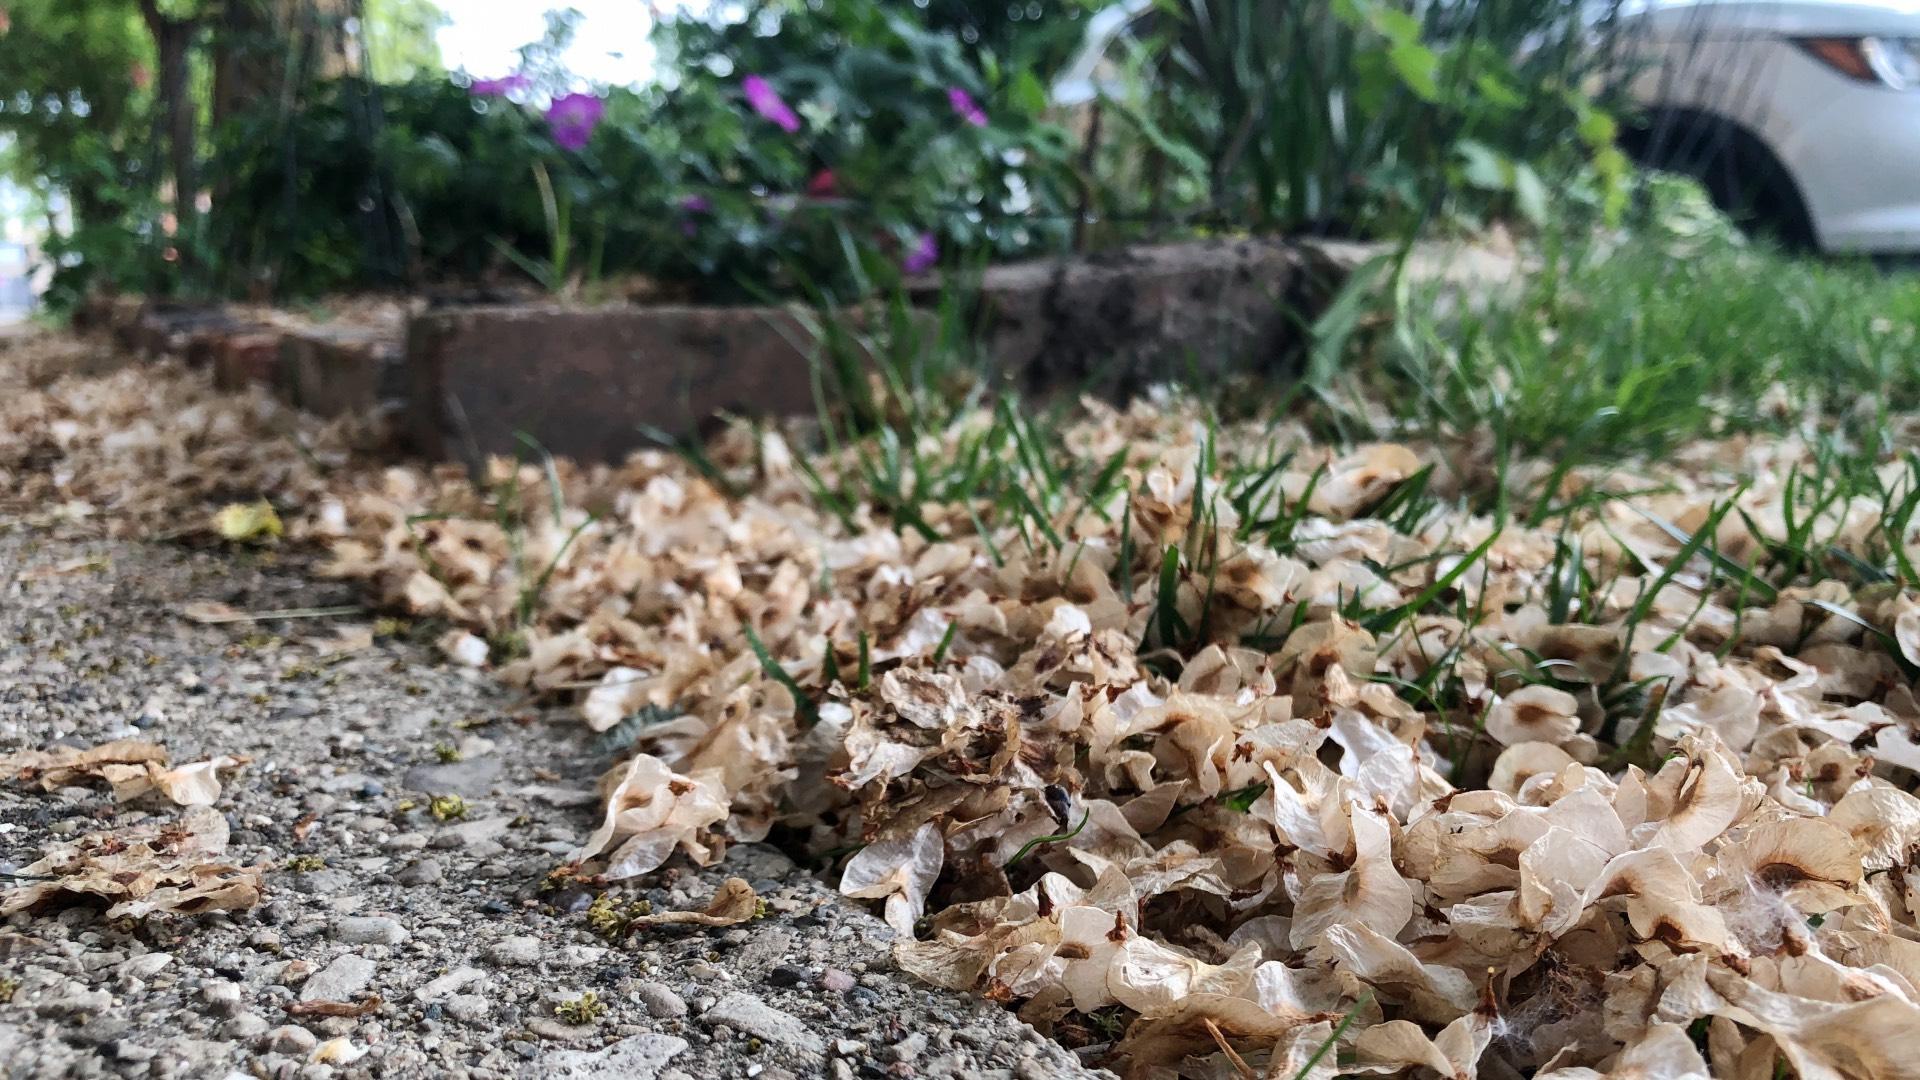 Elm seeds are blanketing lawns and sidewalks. (Patty Wetli / WTTW News)